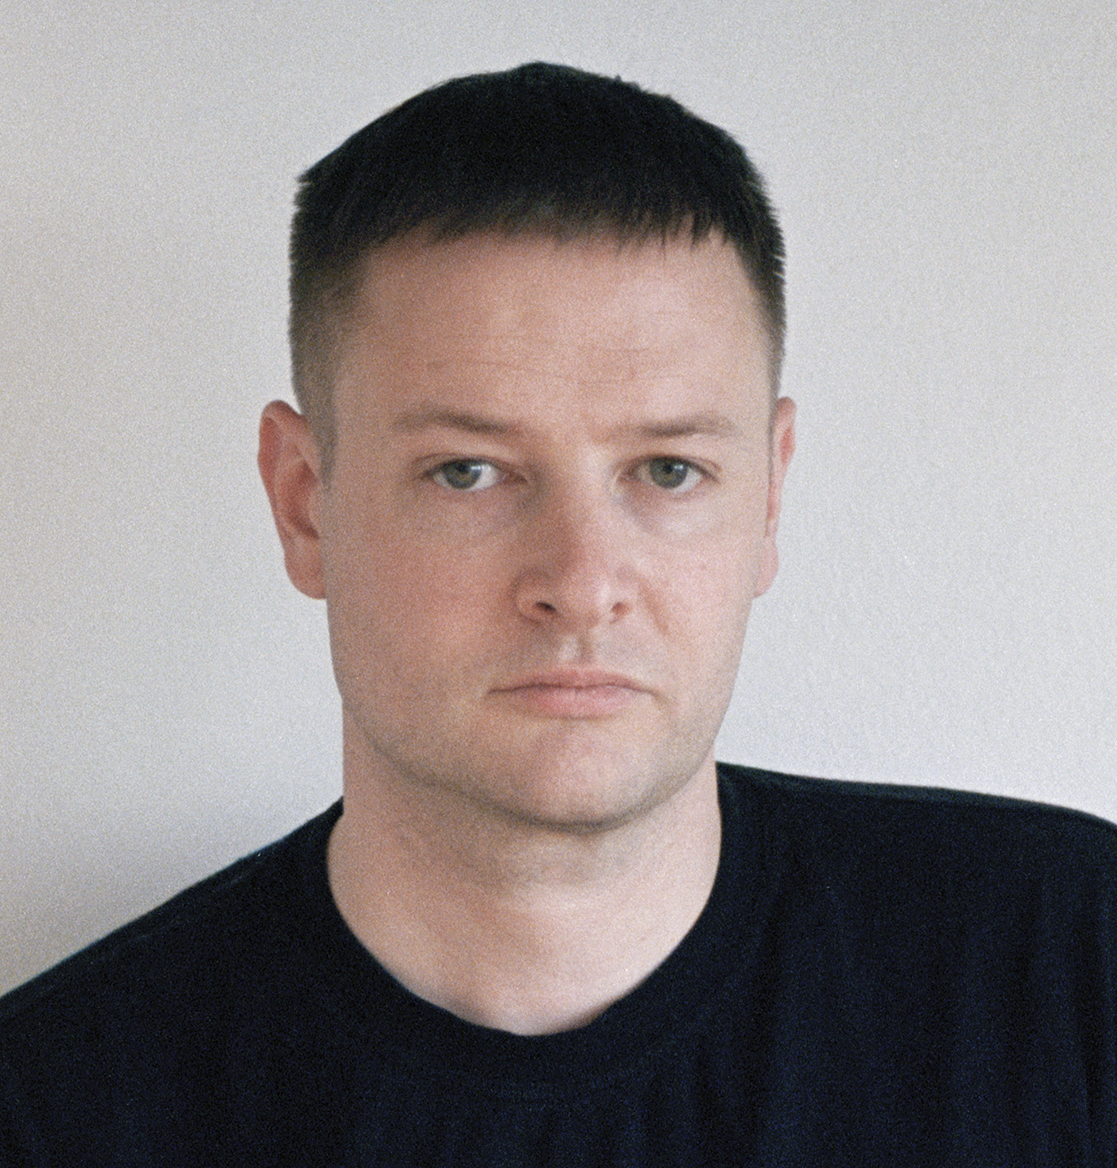 Headshot of a white man with short dark hear wearing a black shirt